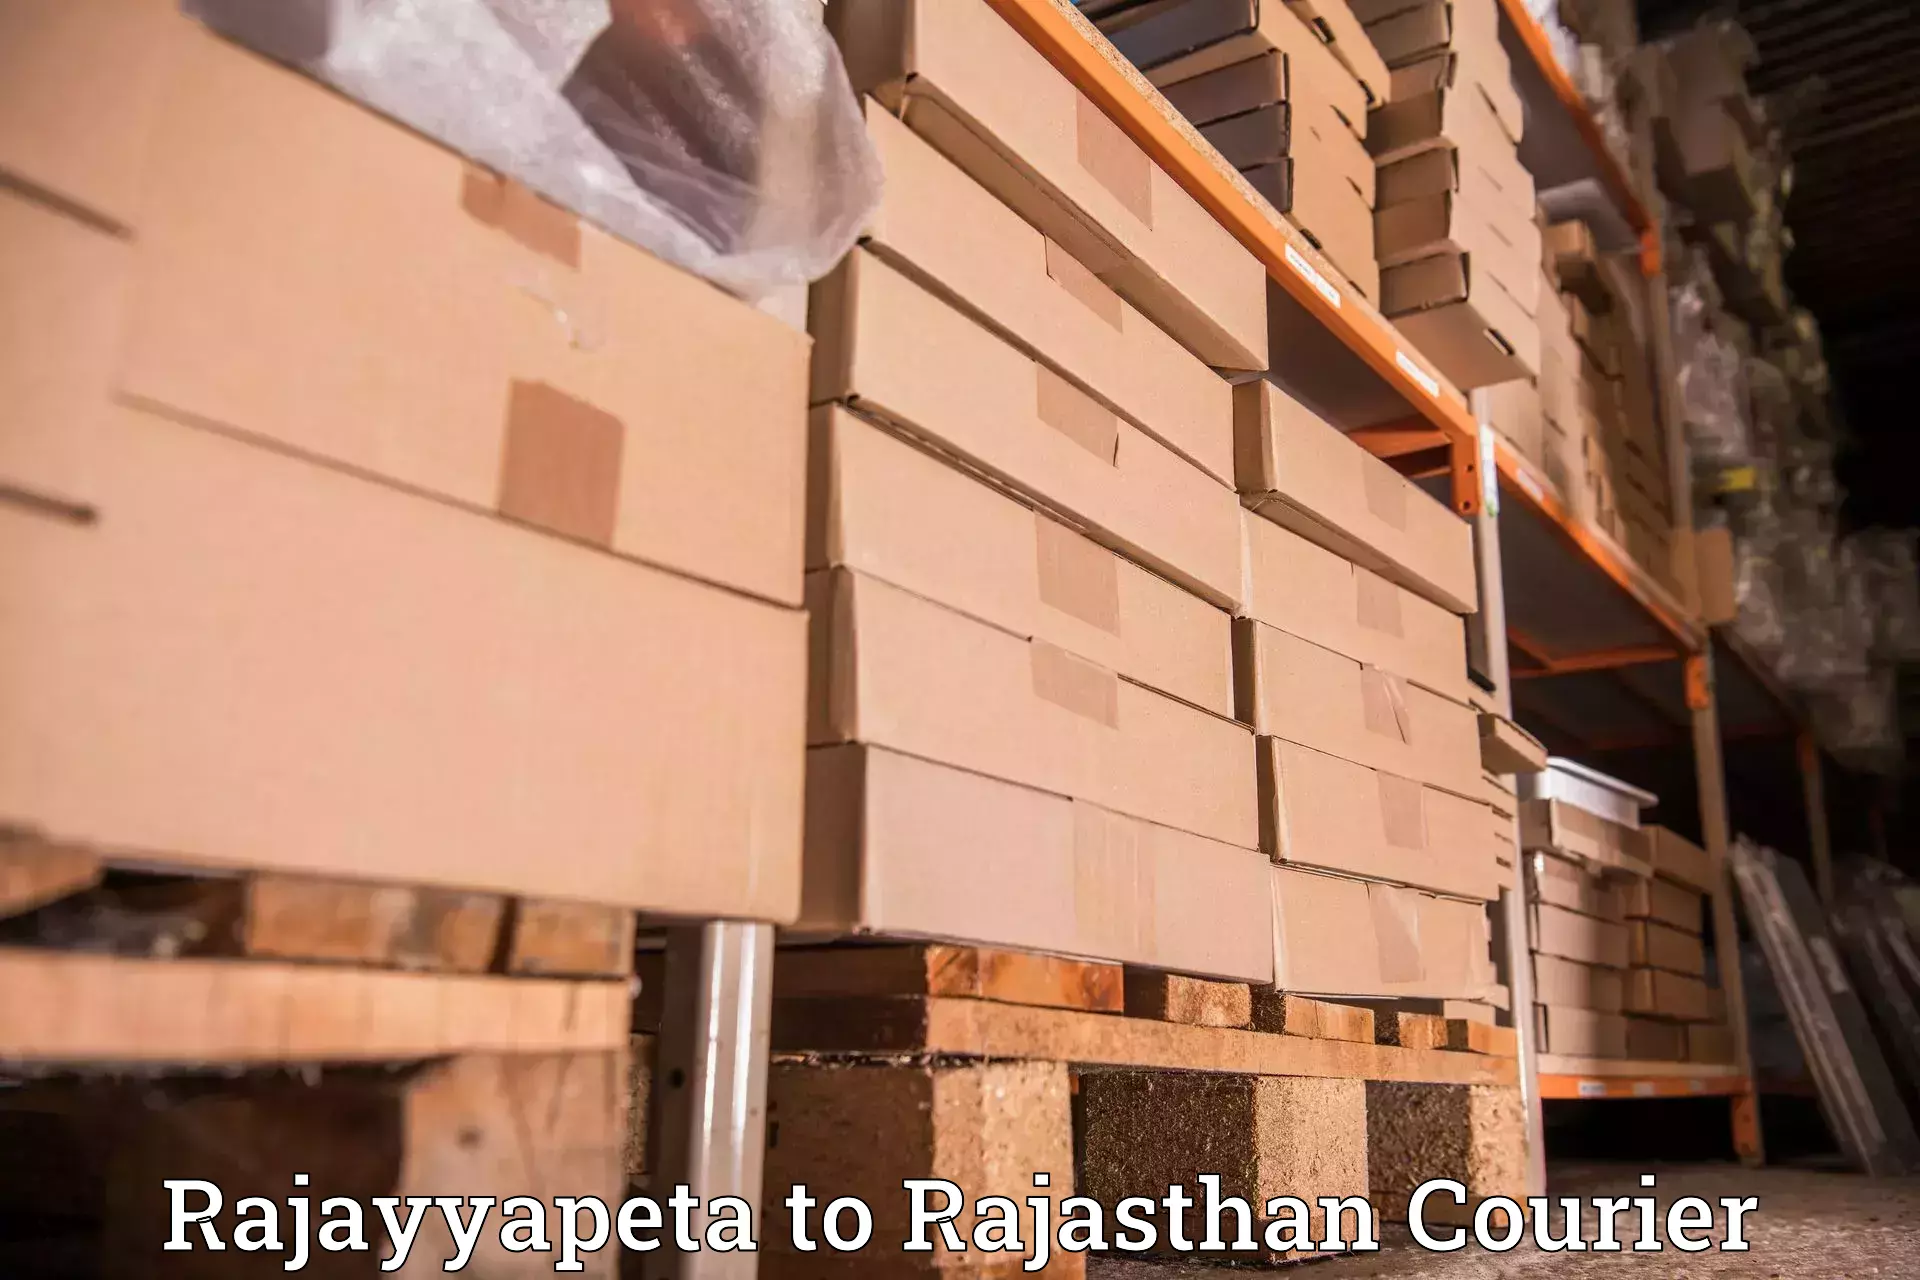 Tech-enabled shipping Rajayyapeta to Yeswanthapur